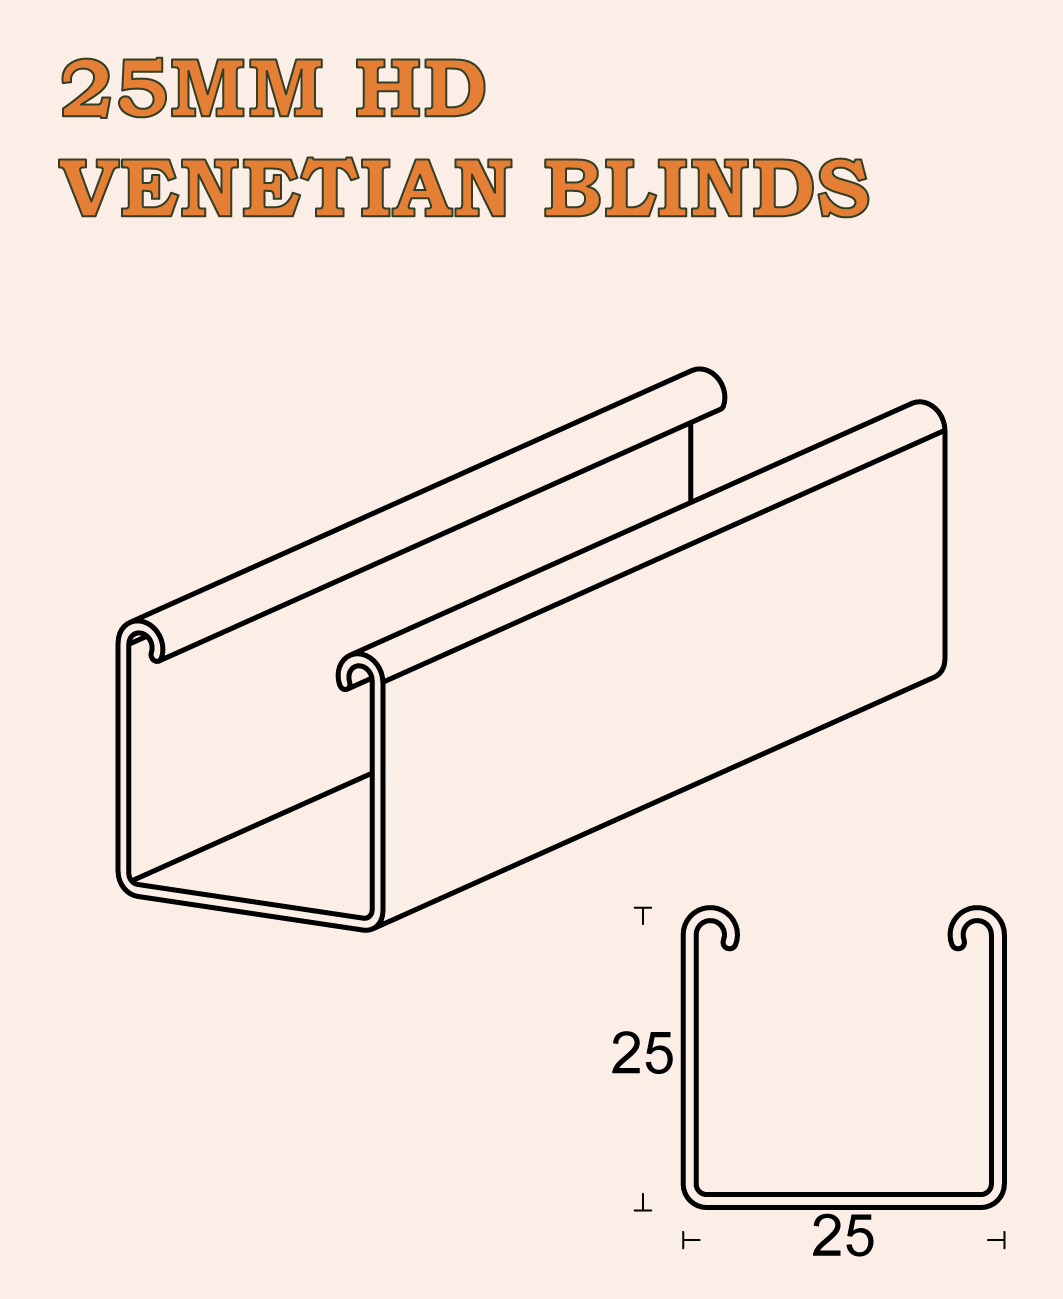 25MM HD VENETIAN BLINDS